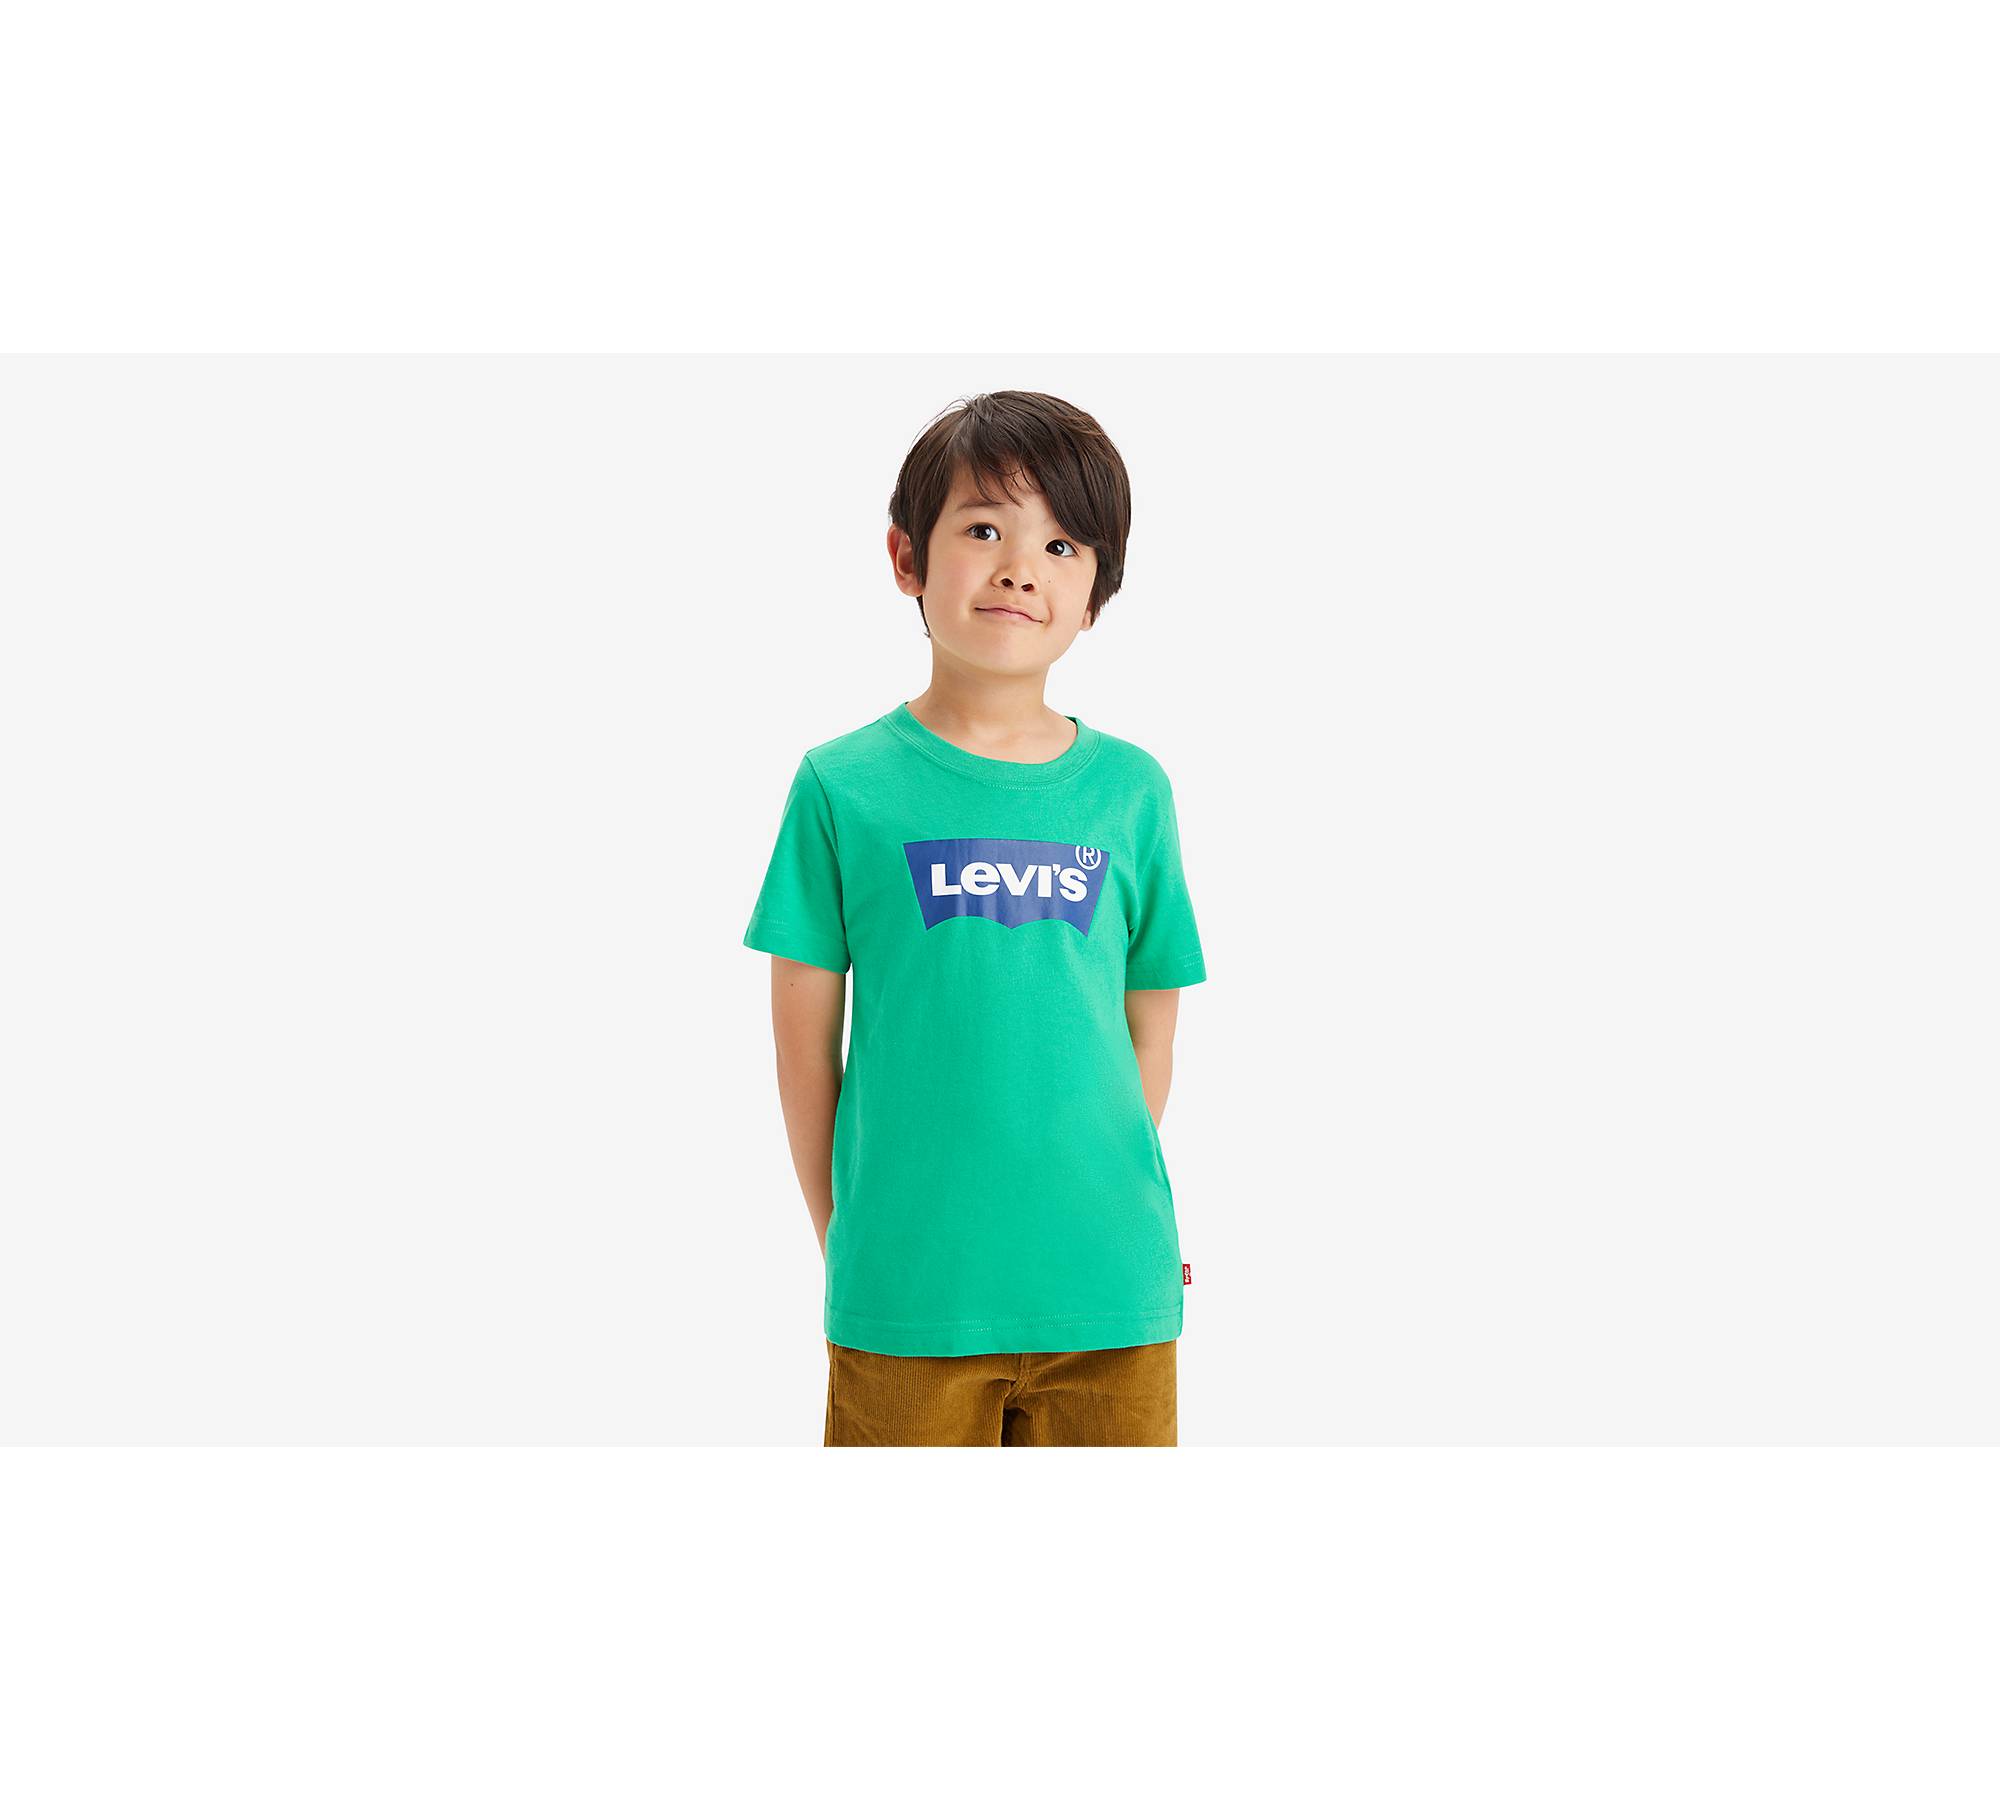 Camiseta Infantil Estampada Batwing - Verde